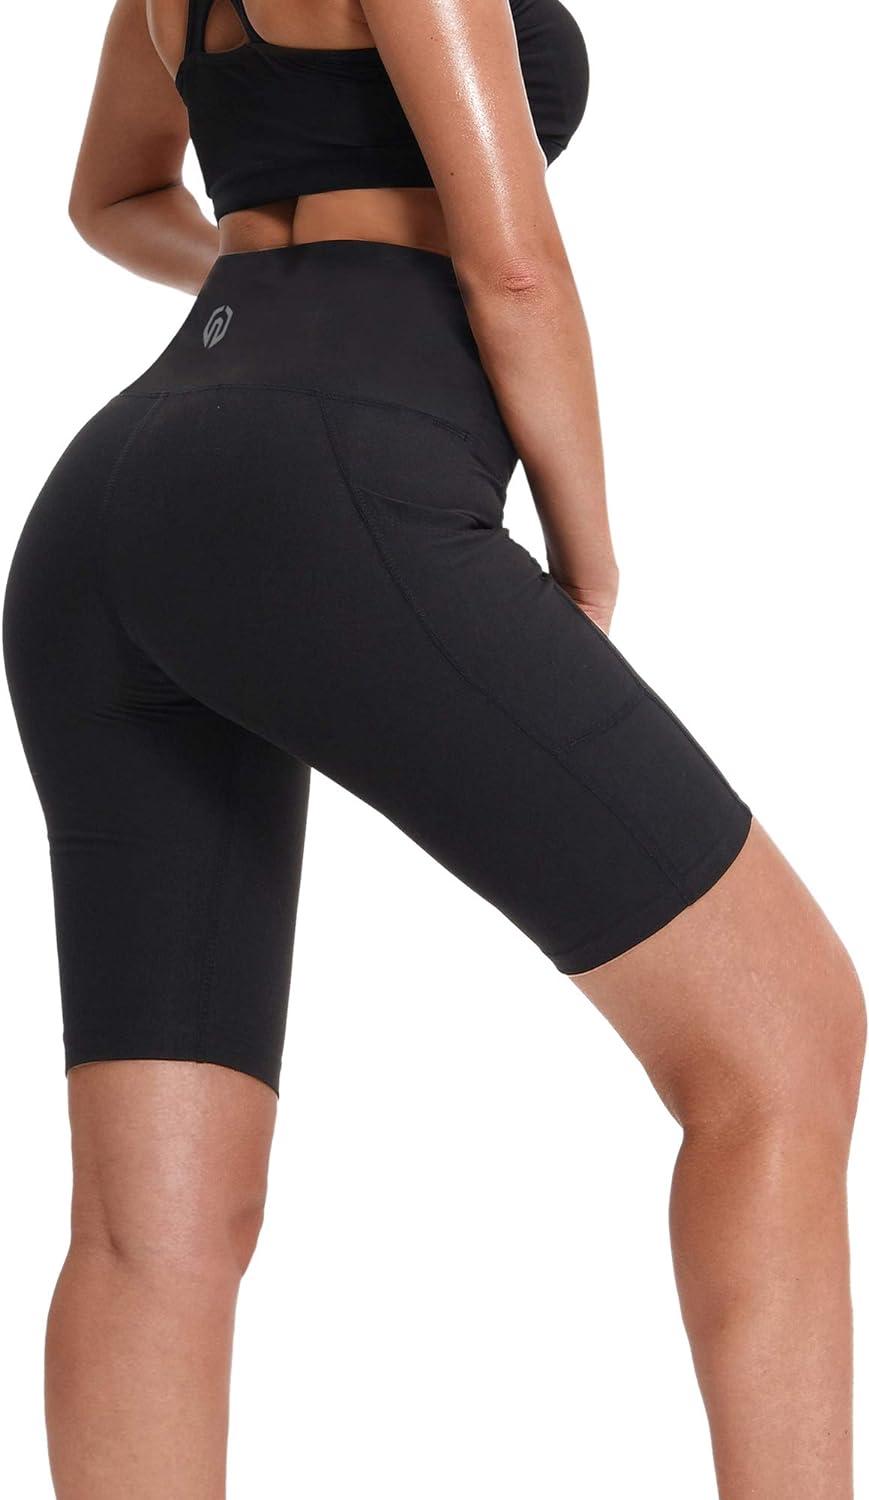  NELEUS Womens 3 Pack Yoga Shorts High Waist Running  Compression Shorts